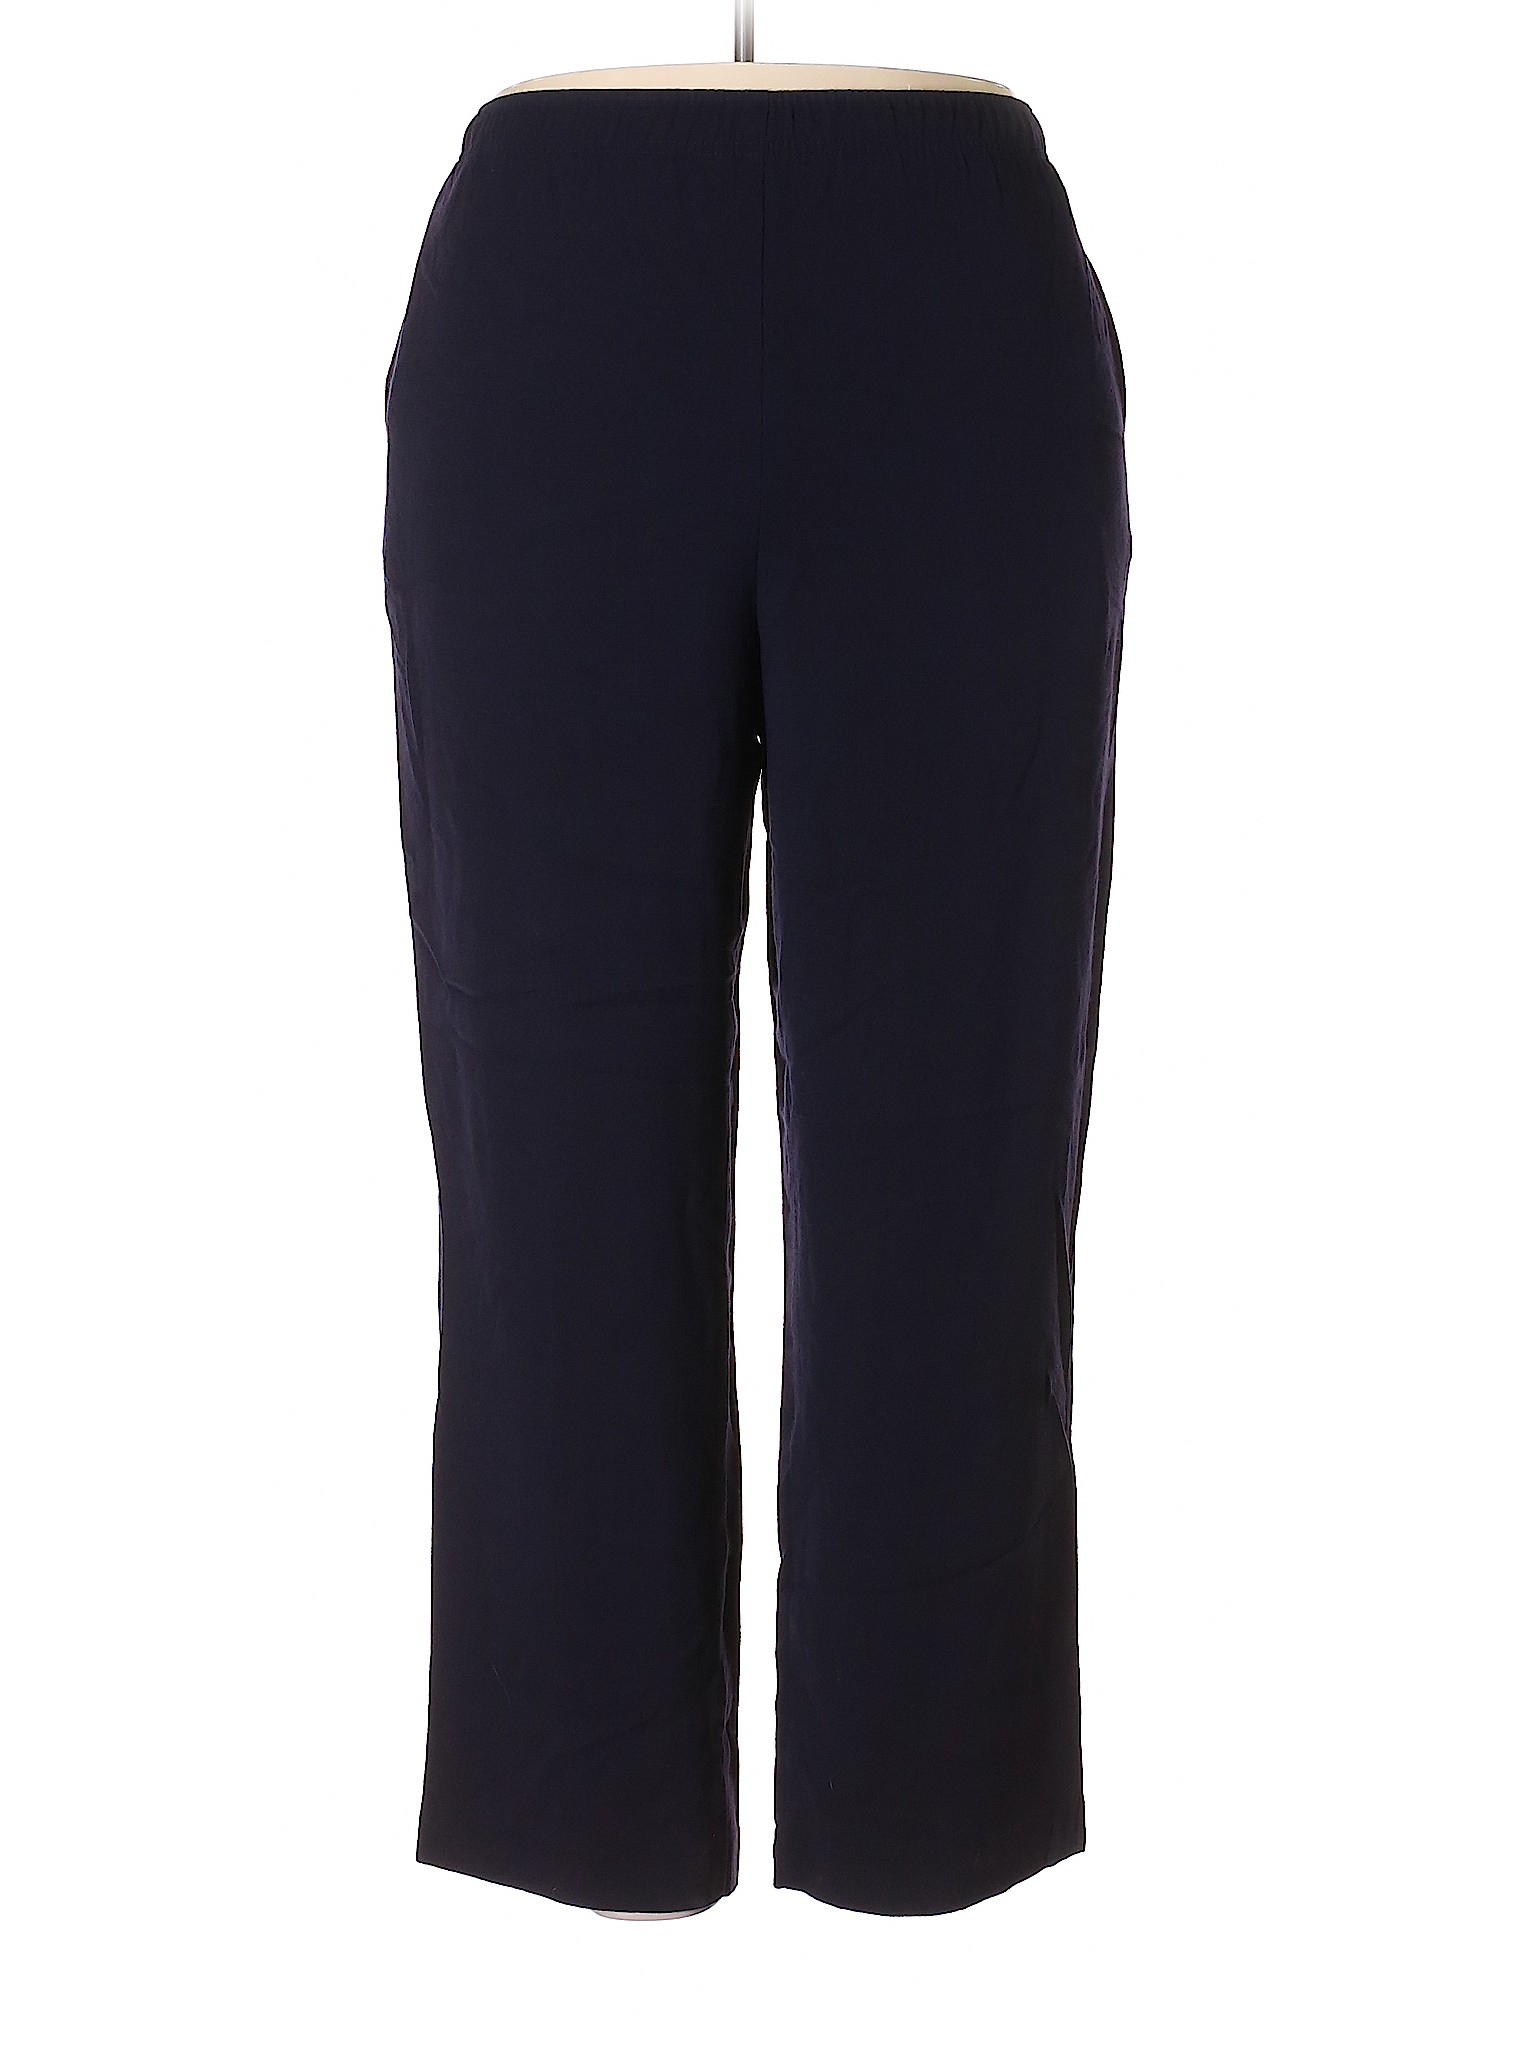 Koret Women Blue Dress Pants 18 Plus | eBay